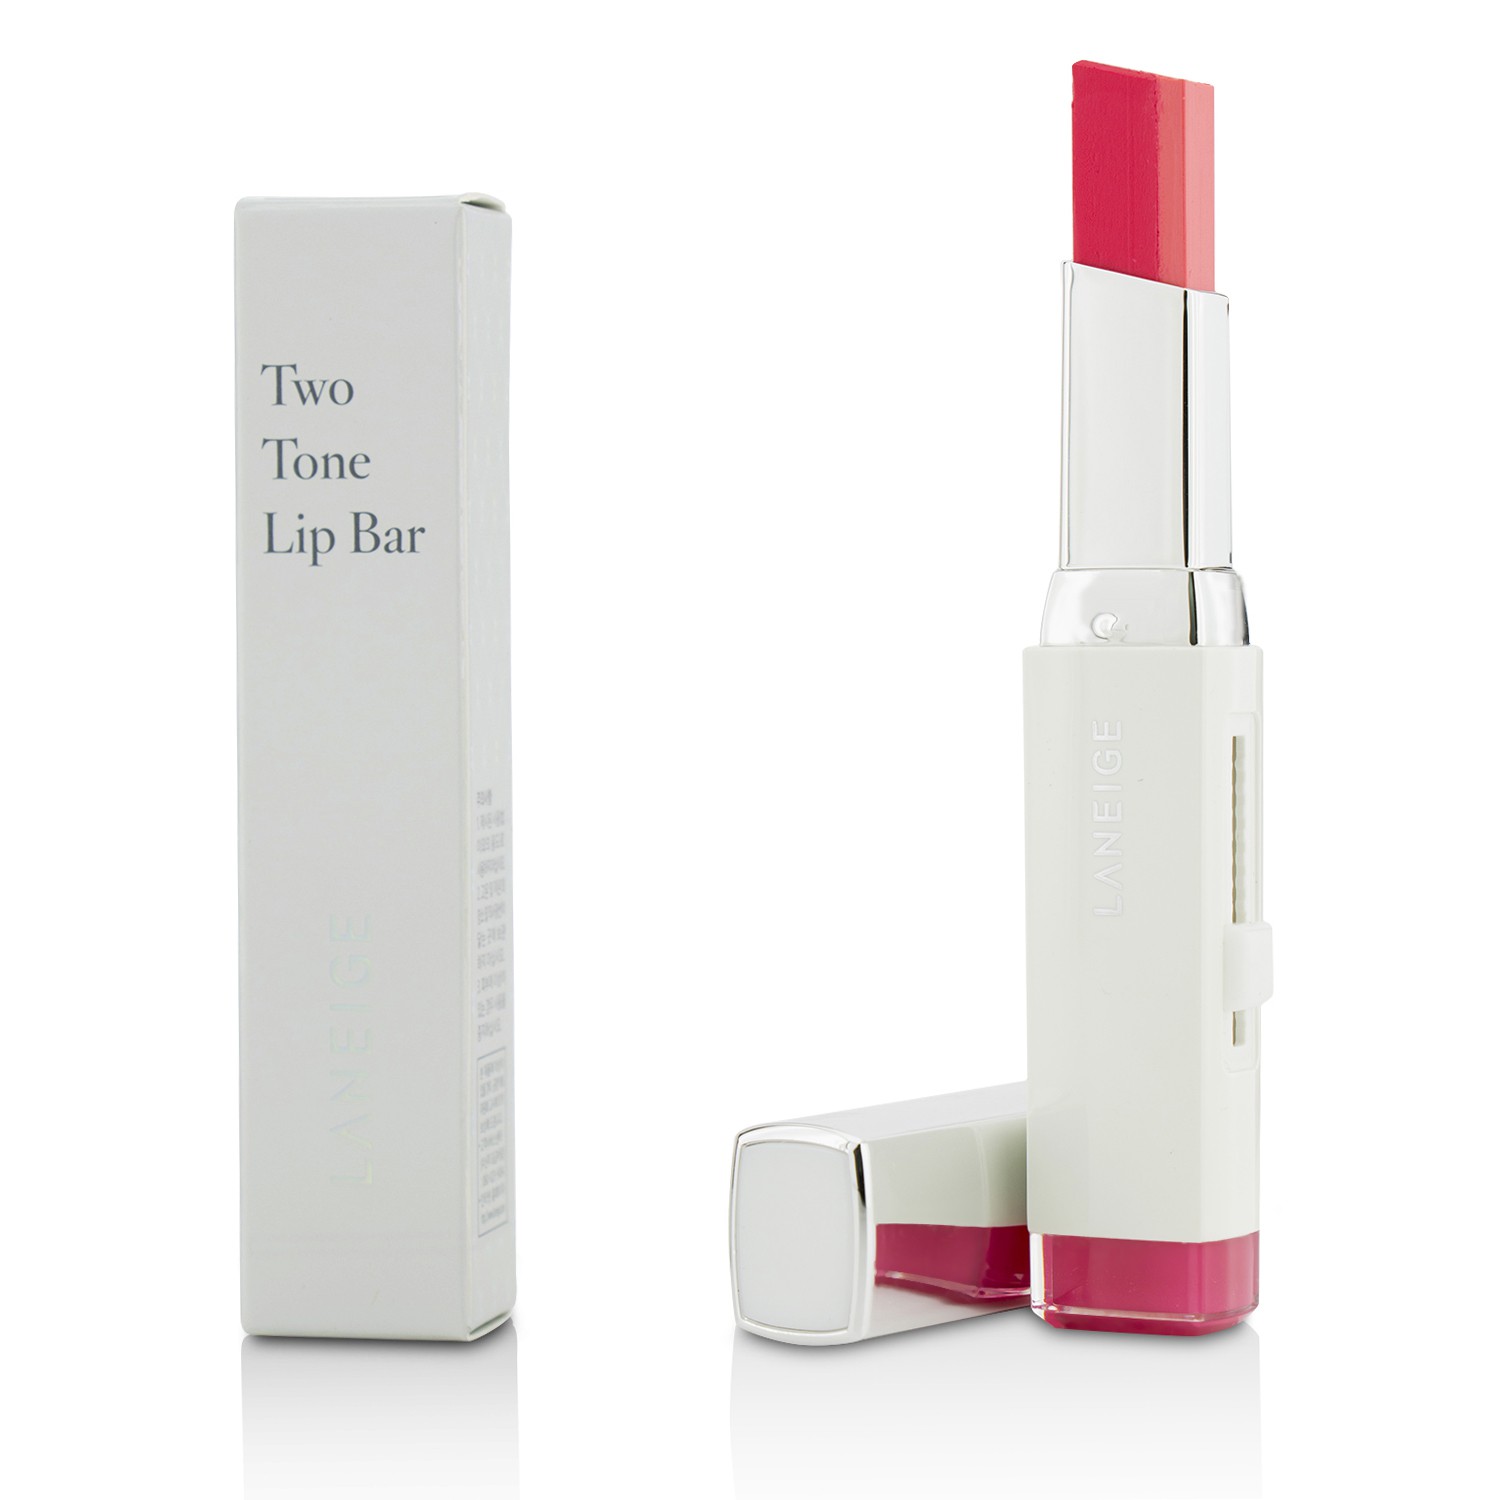 Two Tone Lip Bar - # 6 Pink Step Laneige Image